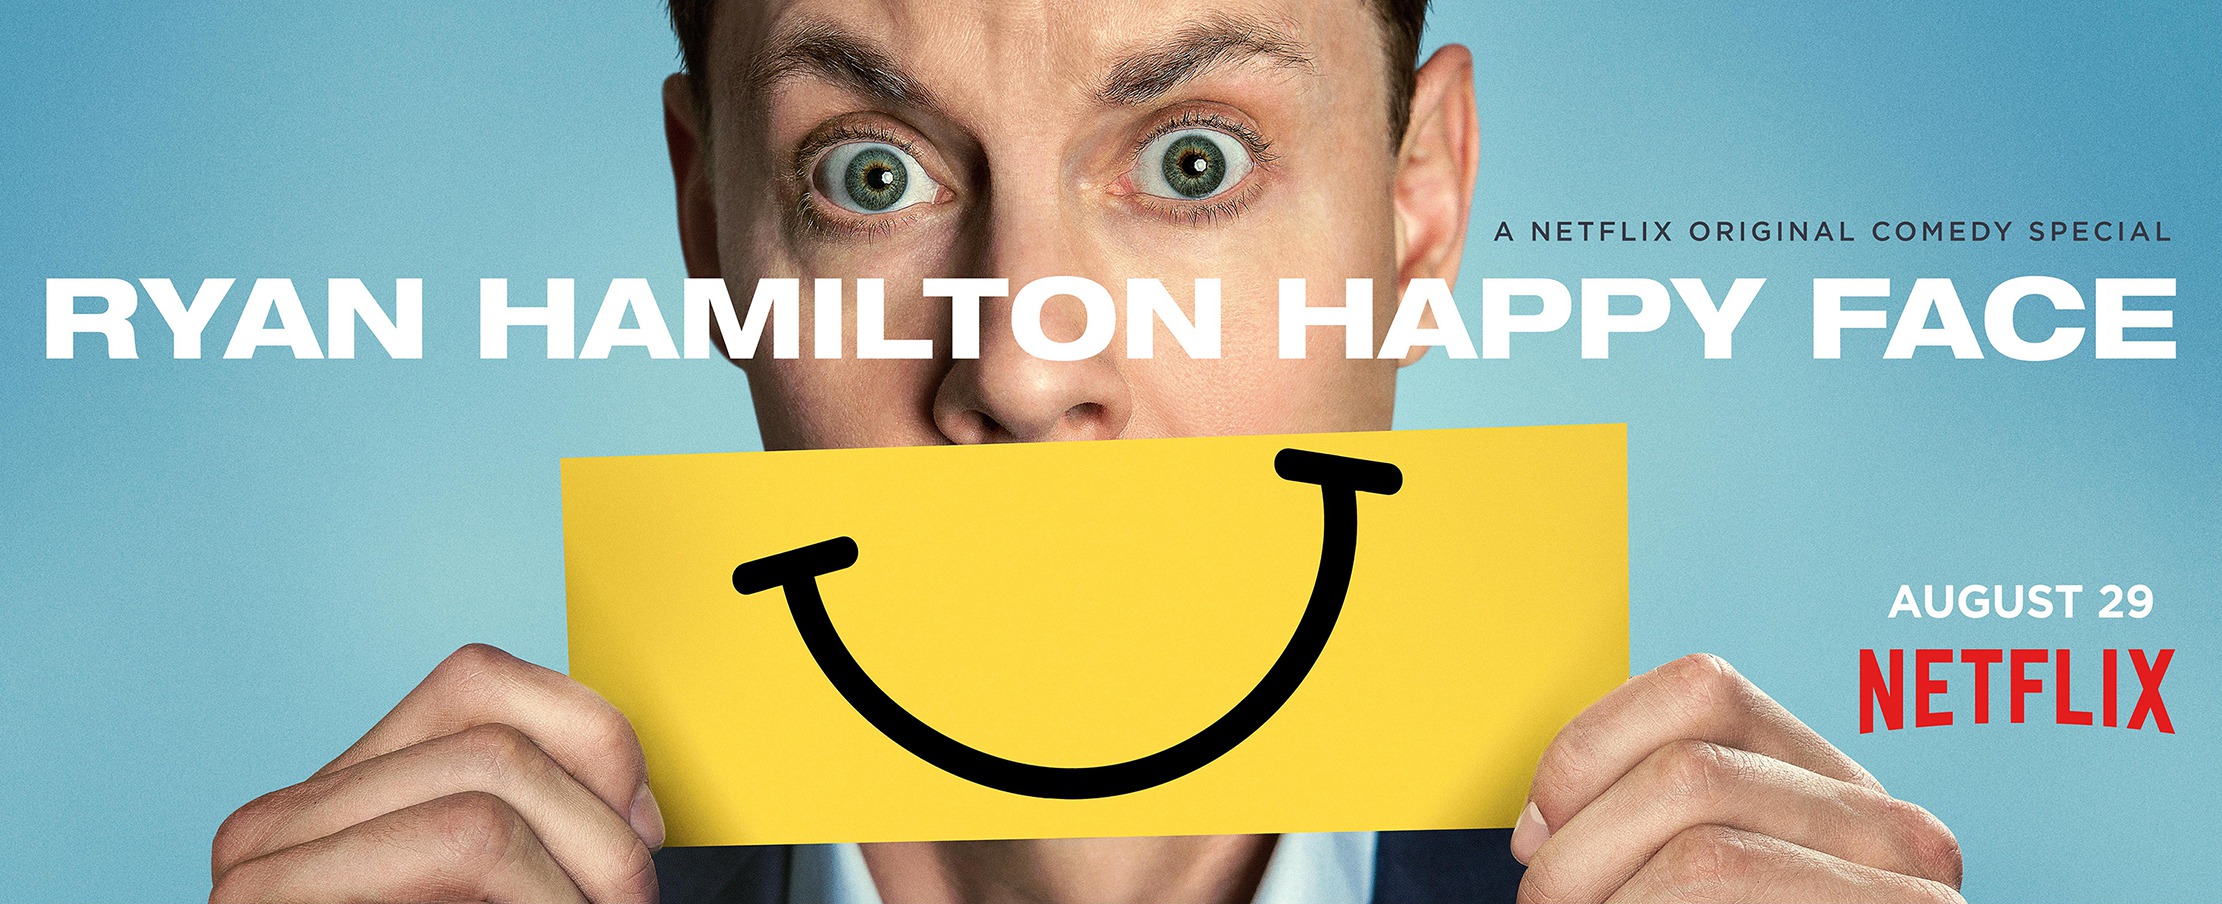 Mega Sized TV Poster Image for Ryan Hamilton: Happy Face 